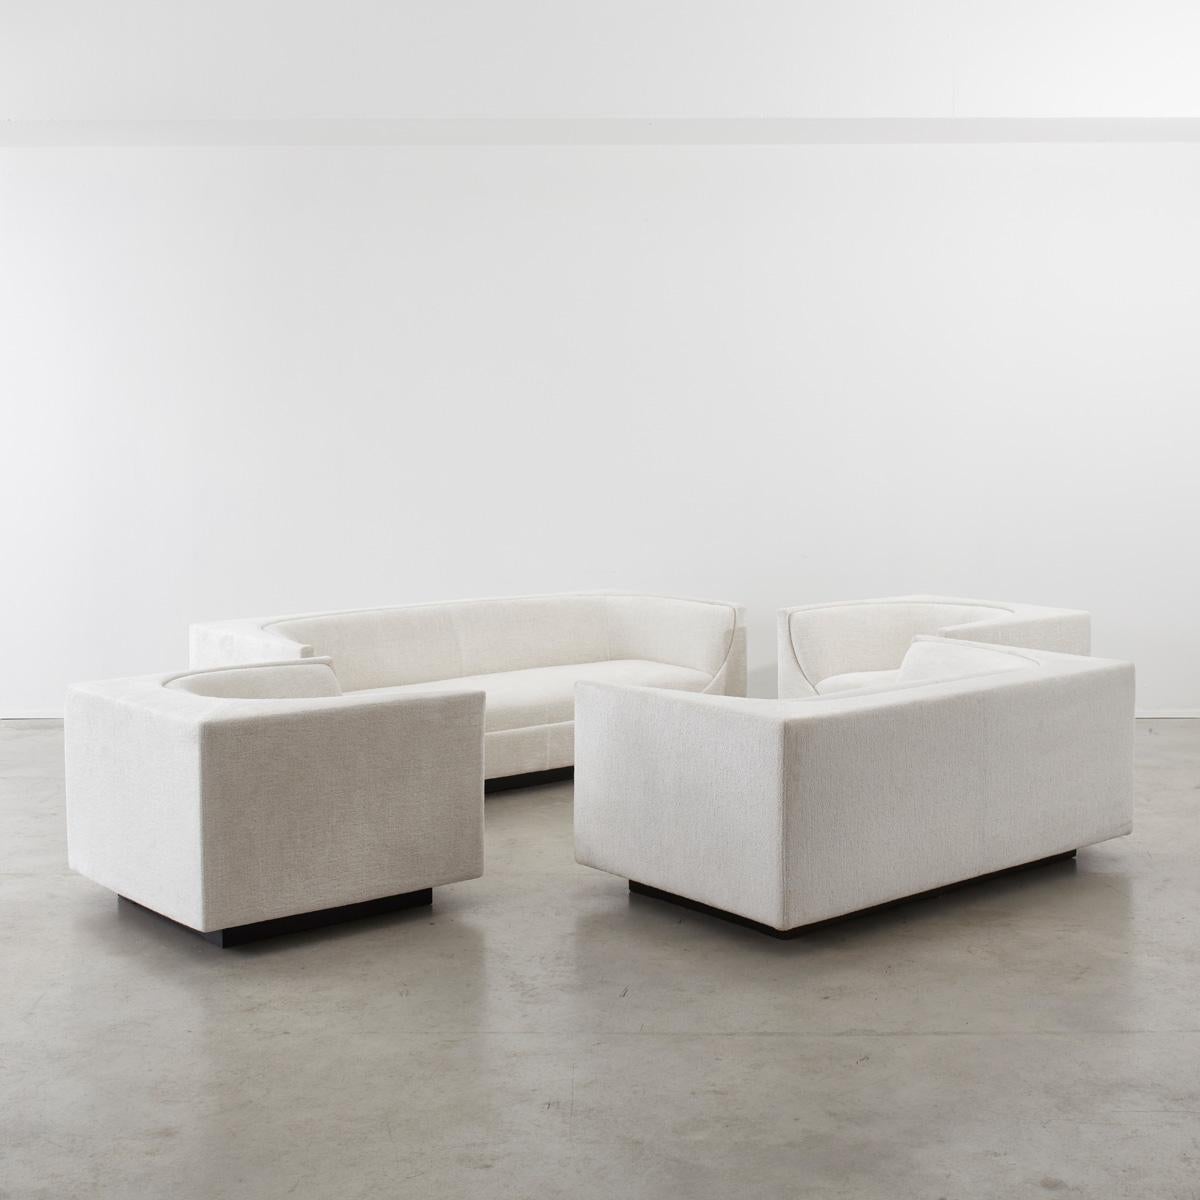 Jorge Zalszupin Pair Cubo Chairs, L’Atelier Brazil, Brazil 1970 6